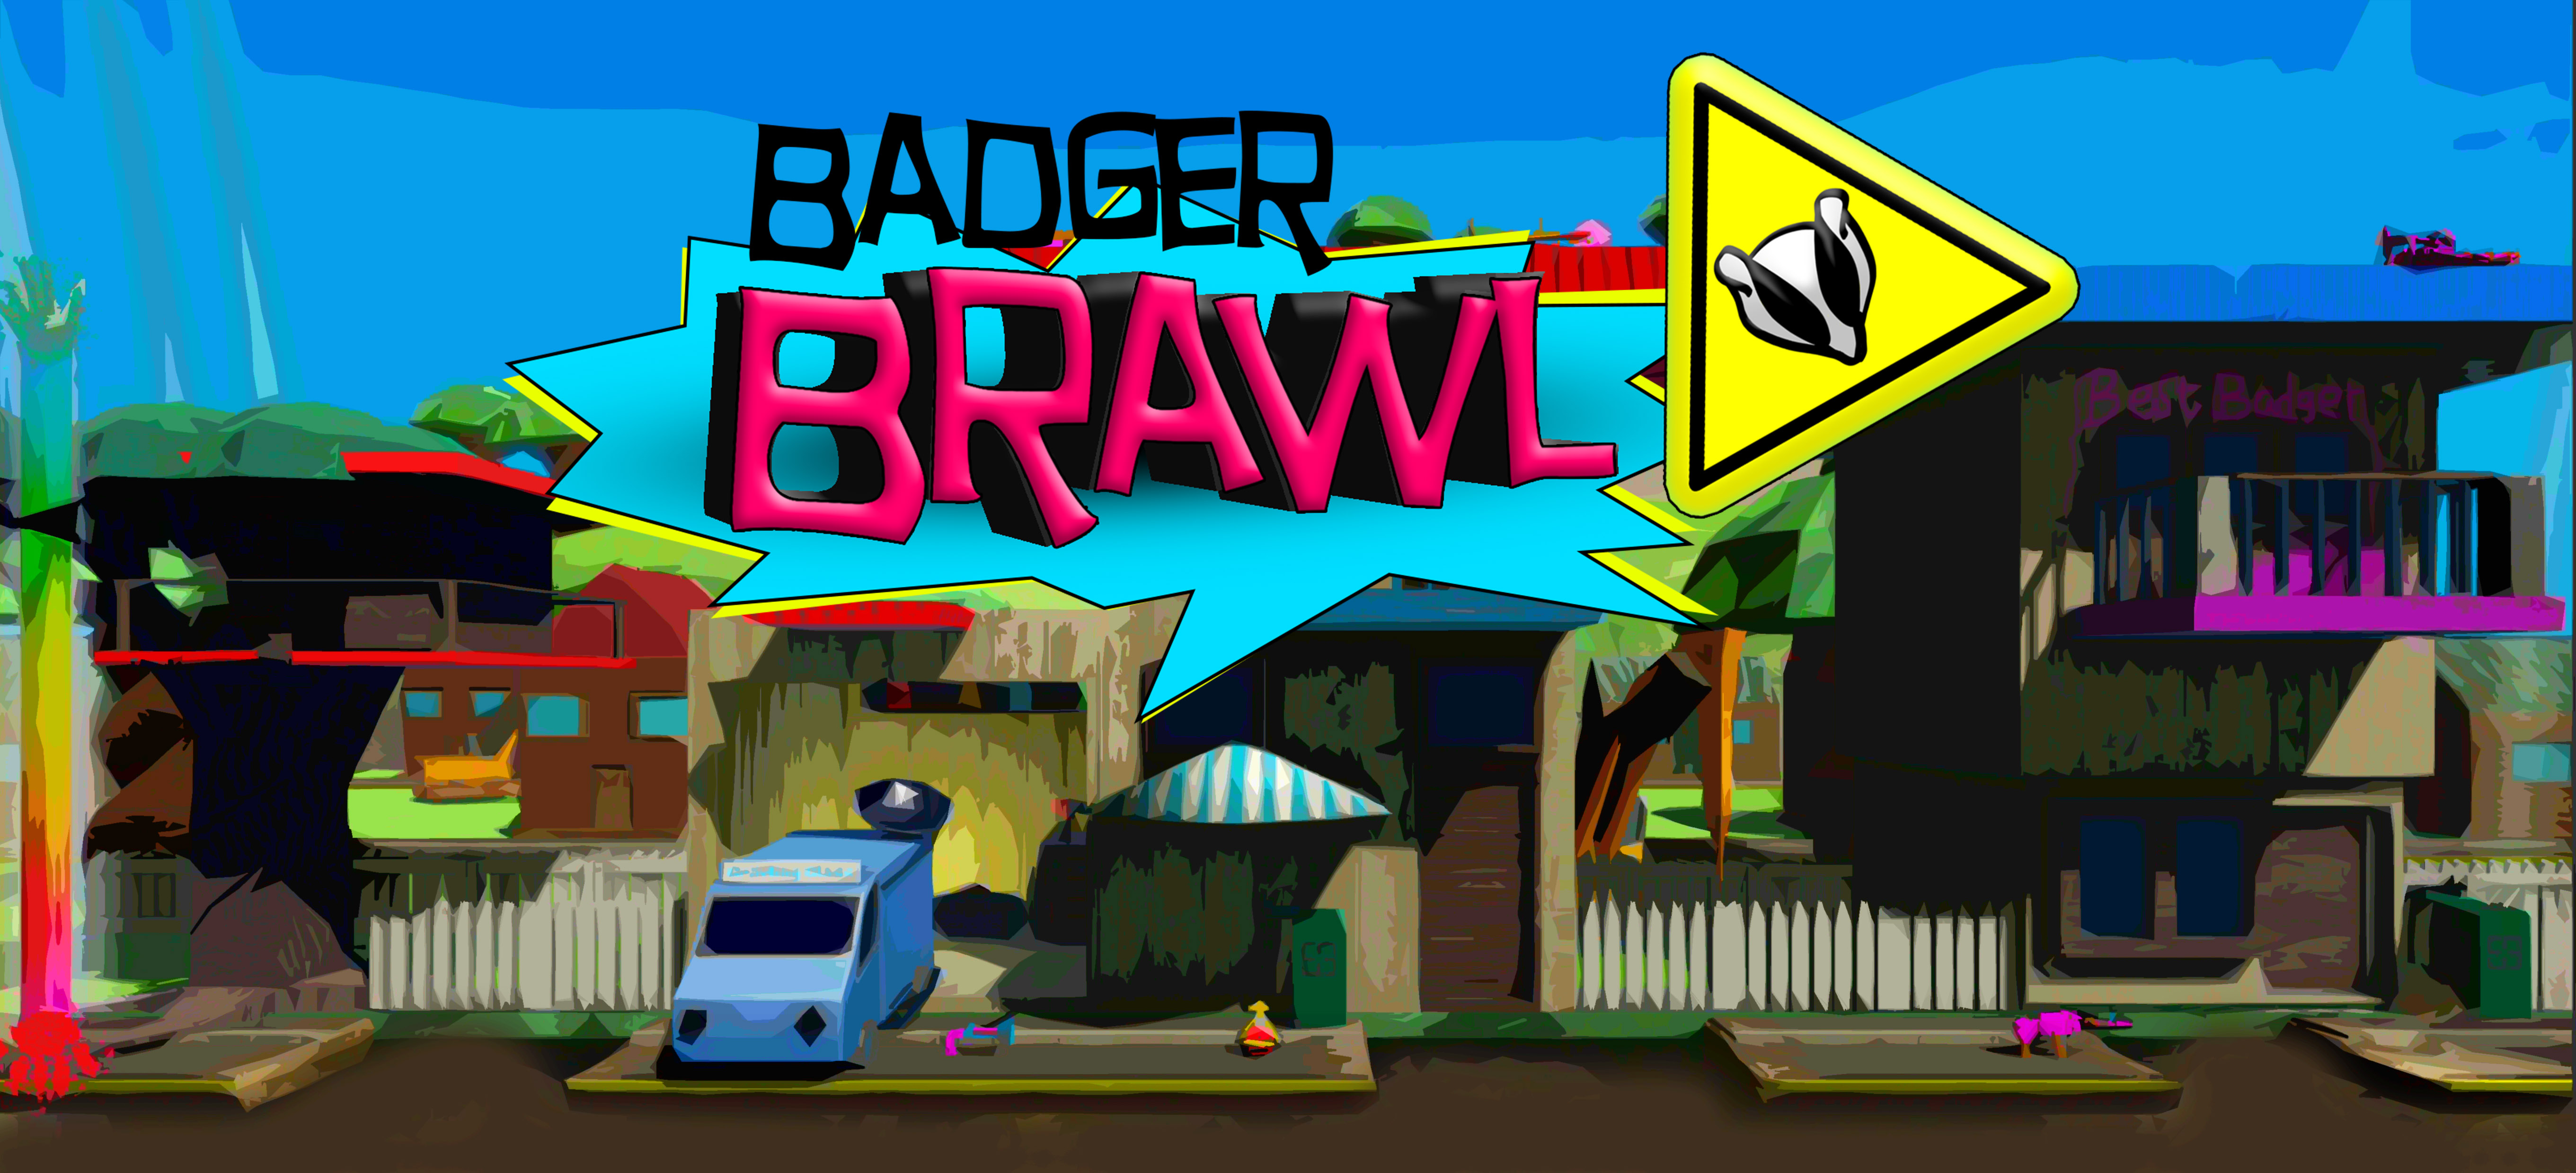 Badger Brawl